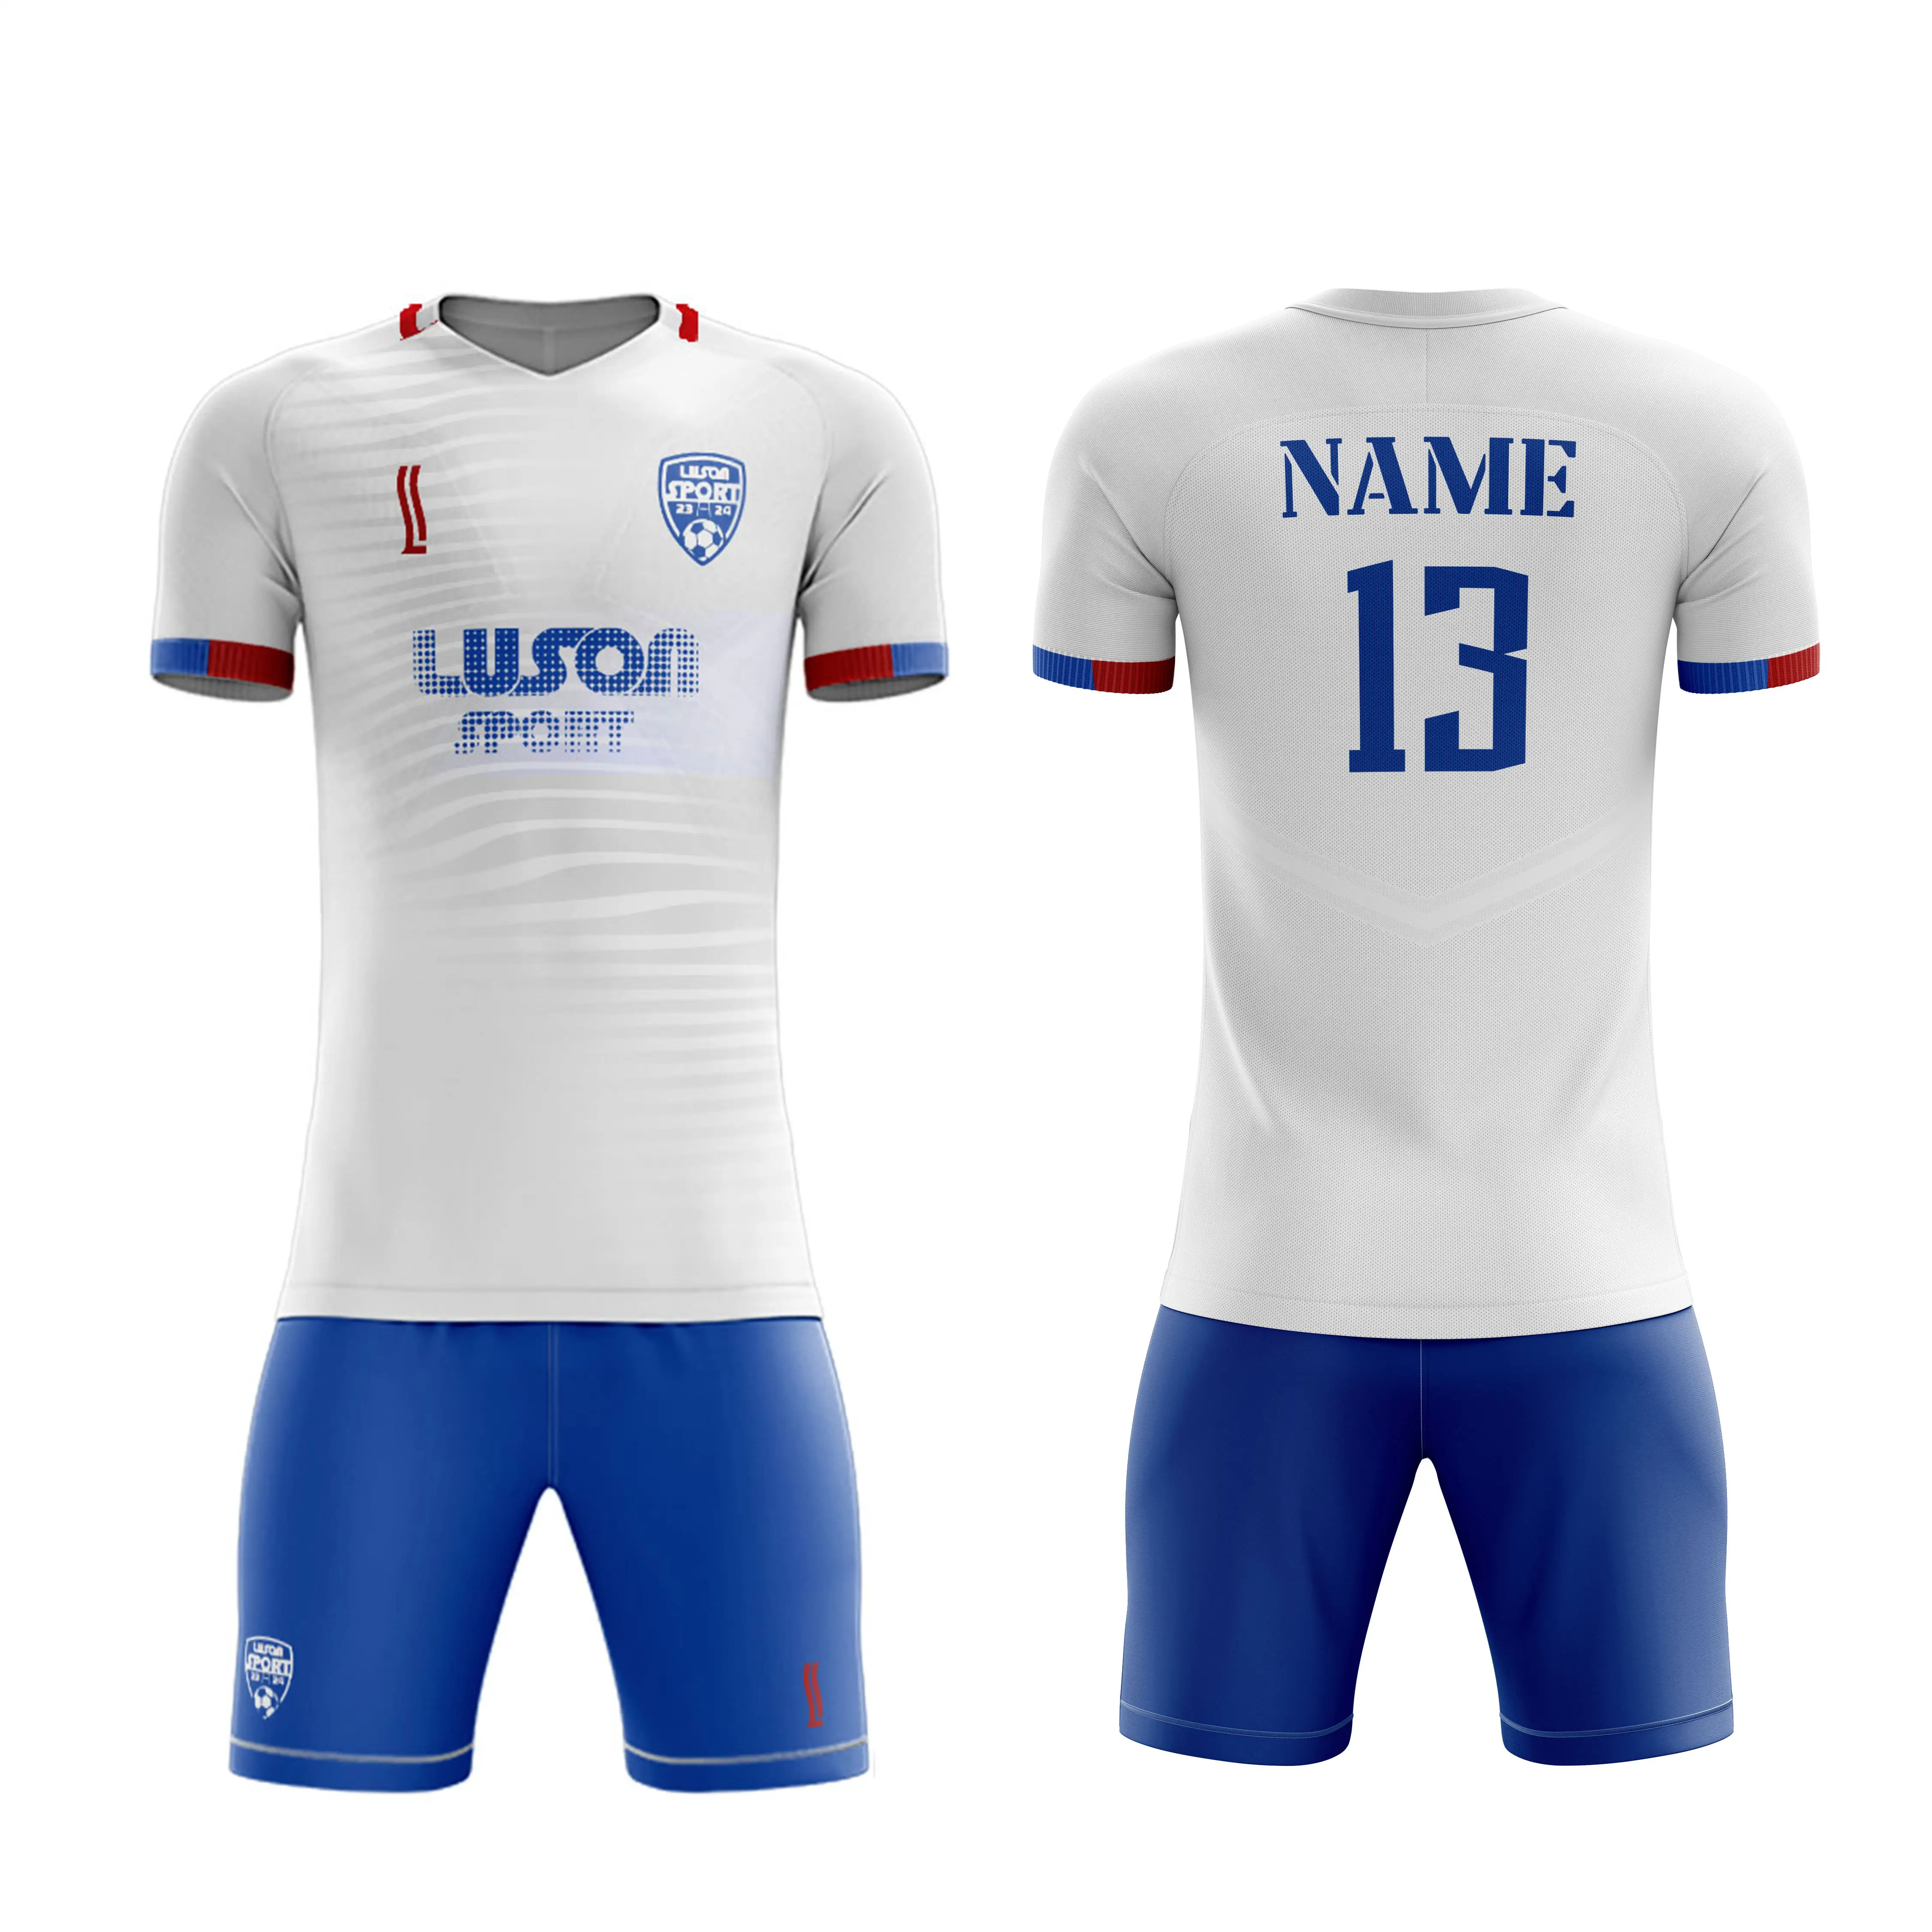 Luson بالجملة صنع جديد نادي كرة القدم جيرسي ملابس مخصصة بوليستر صمي الرجال لكرة القدم جيرسي